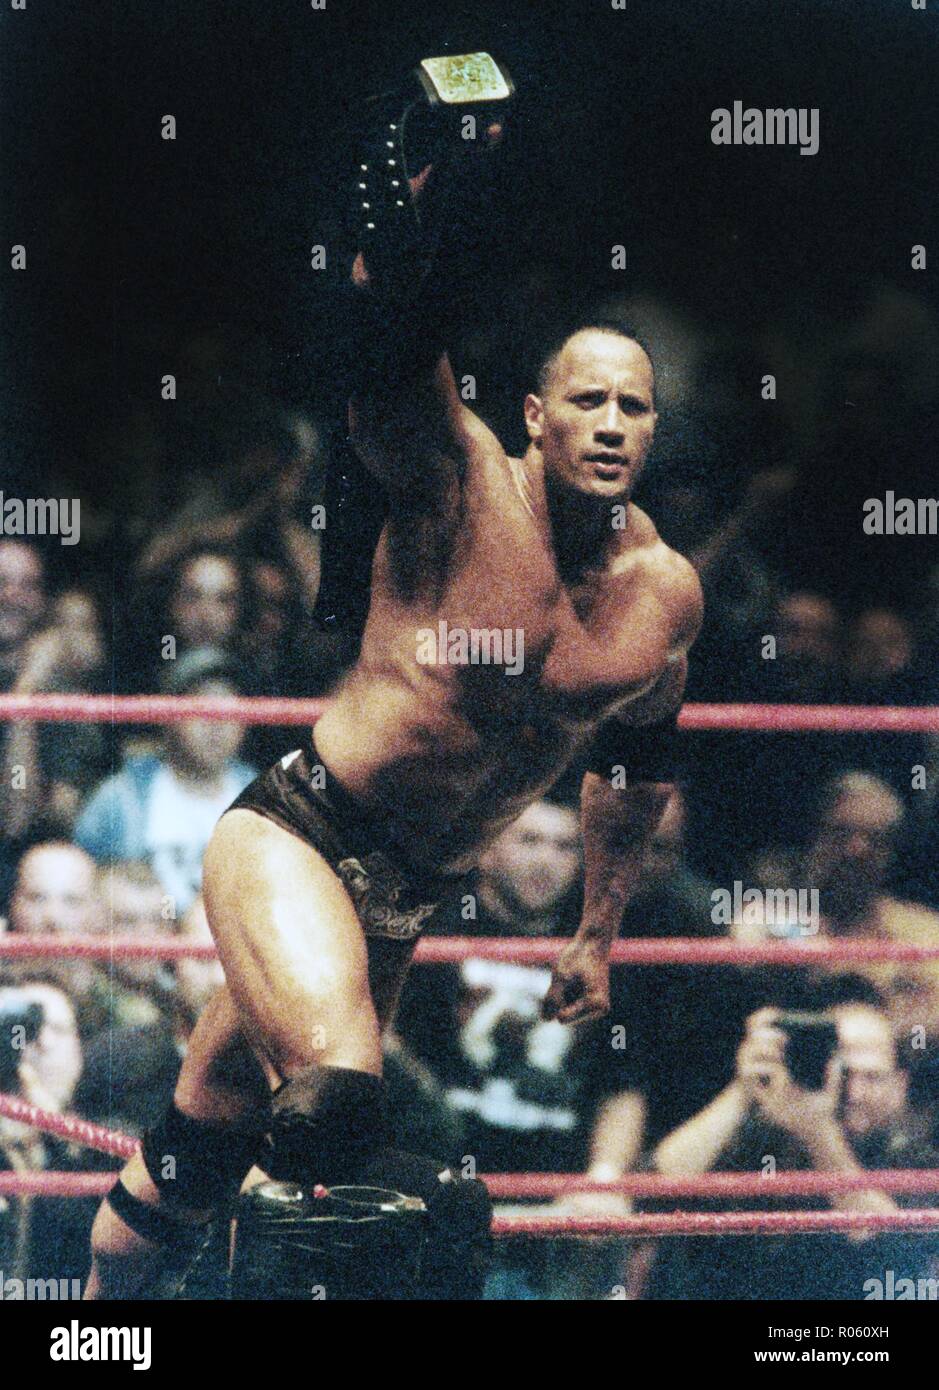 The Rock Dwayne Johnson At Madison Square Garden In 1999 Photo By John  Barrett/Photolink /Mediapunch Stock Photo - Alamy